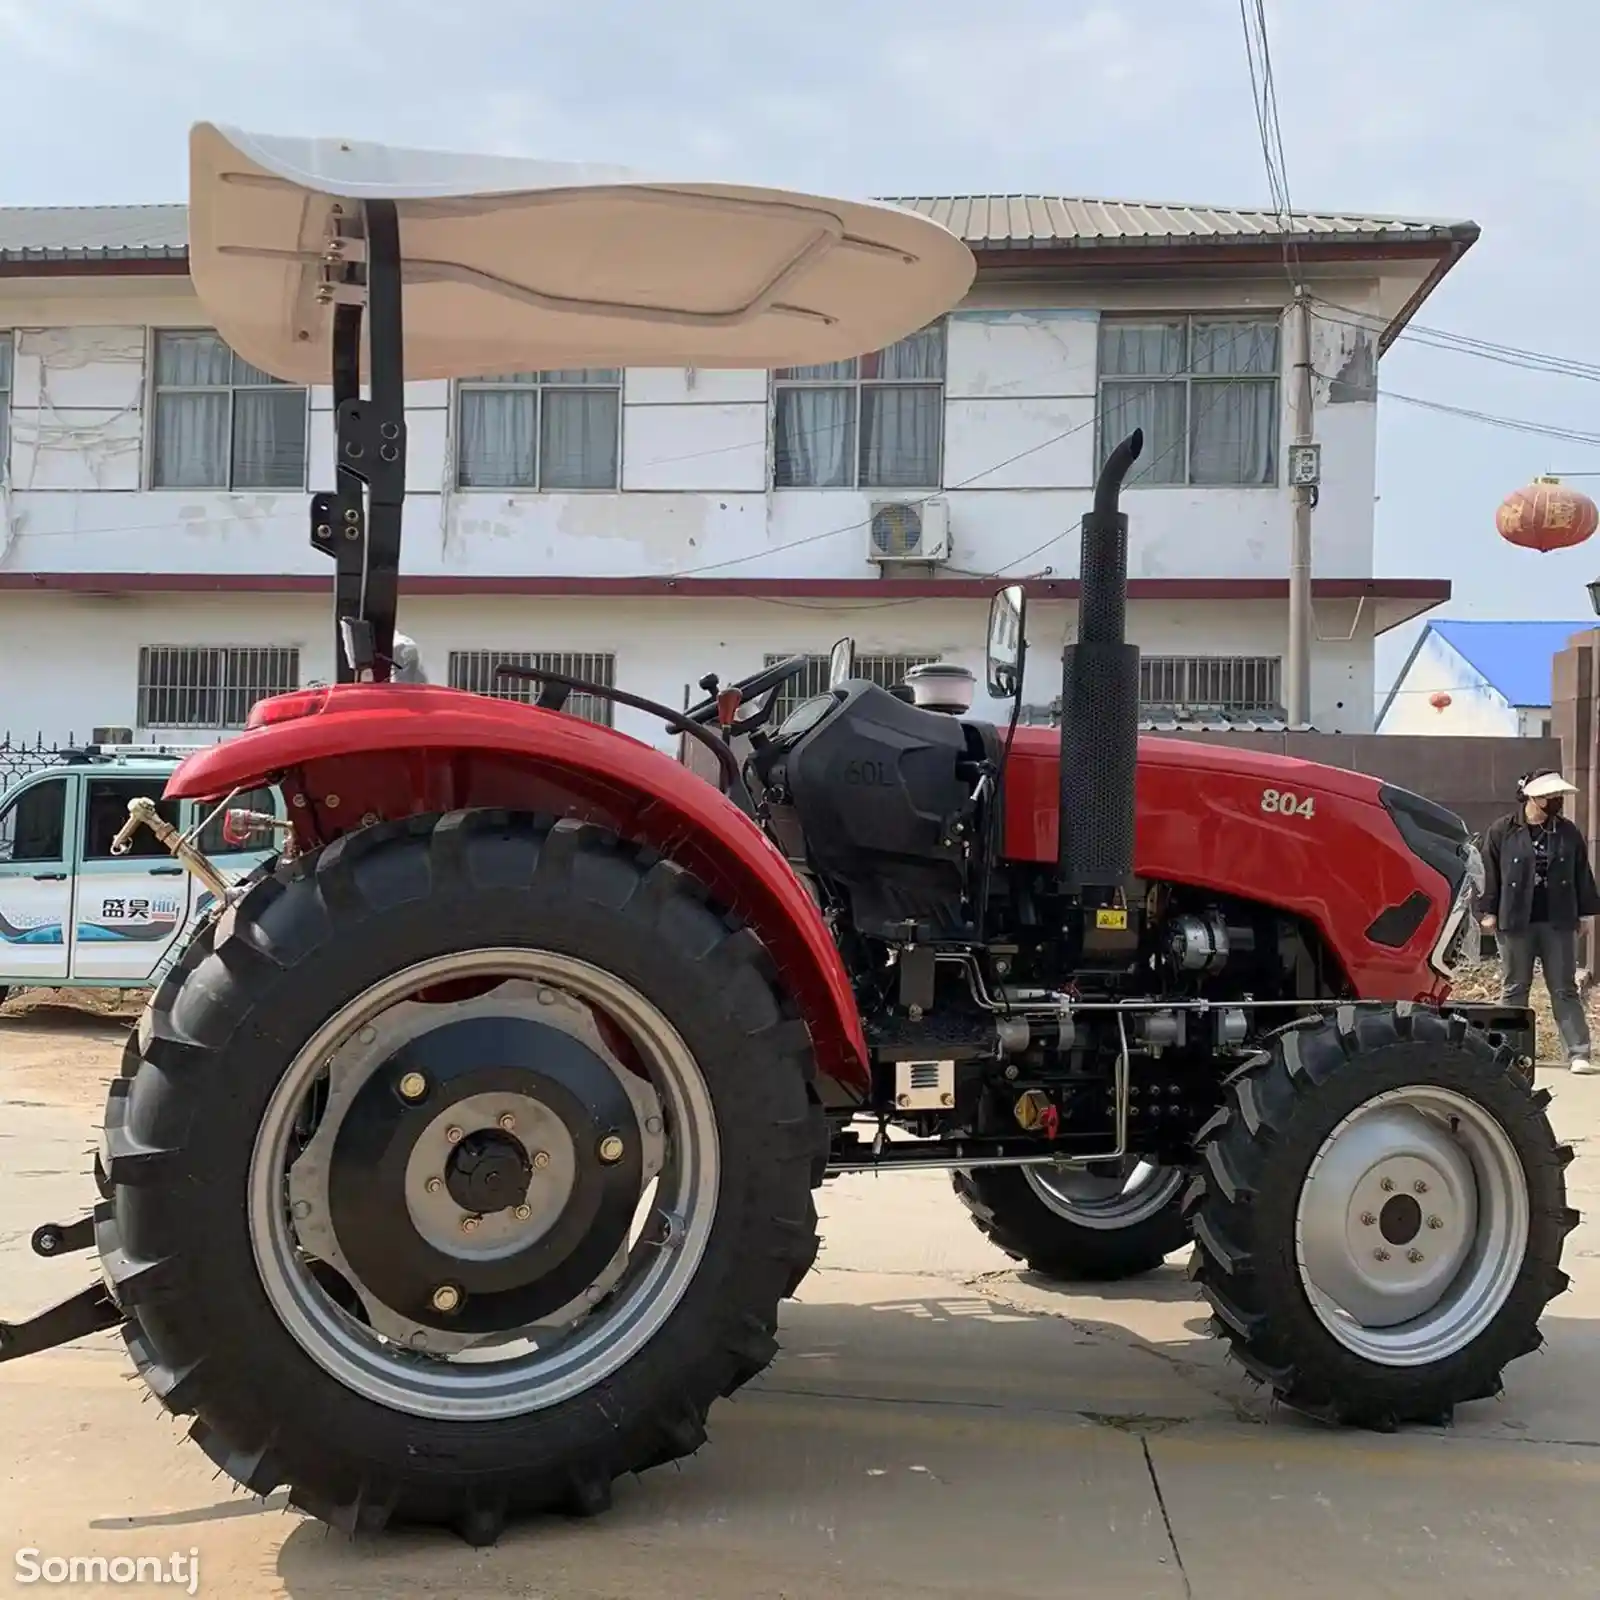 Мини-трактор 804-2